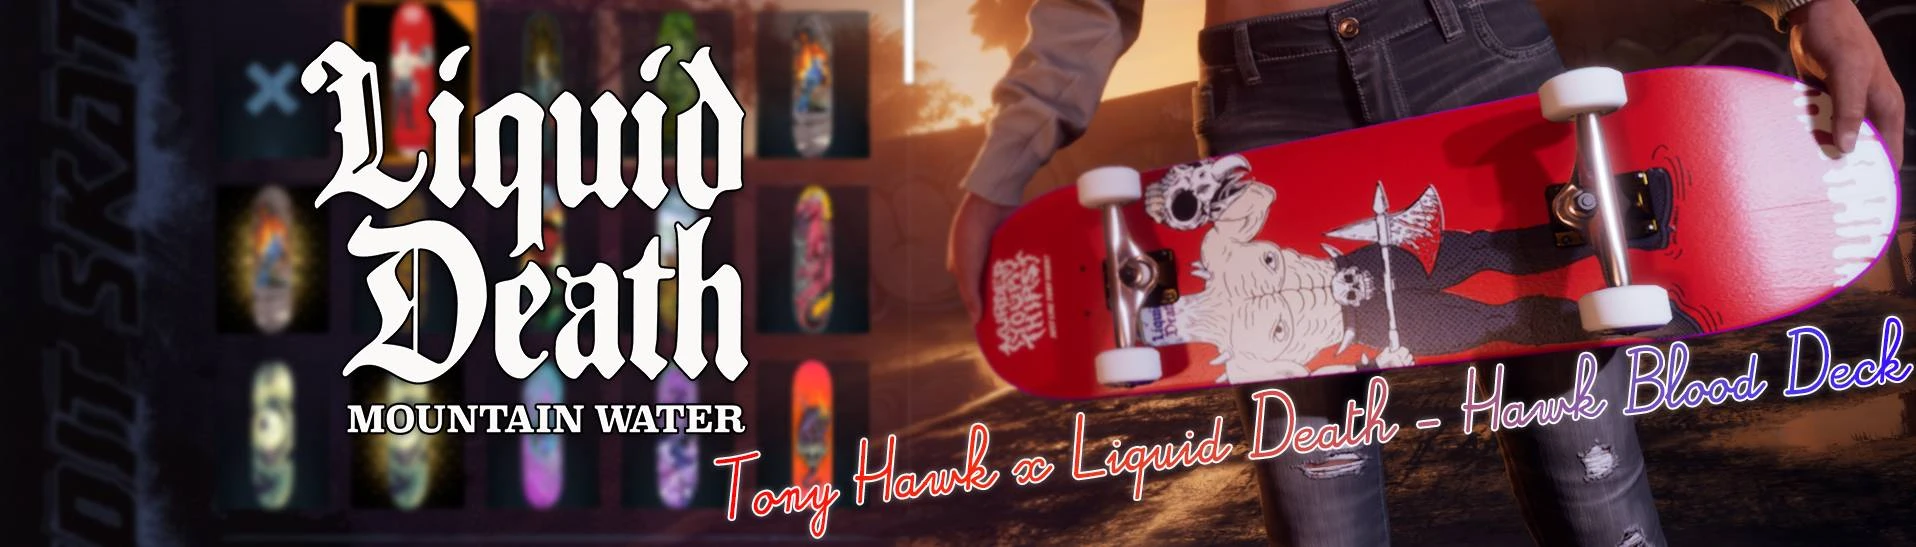 Tony Hawk x Liquid Death - Hawk Blood Deck at Tony Hawk's Pro Skater 1 + 2  Nexus - Mods and community